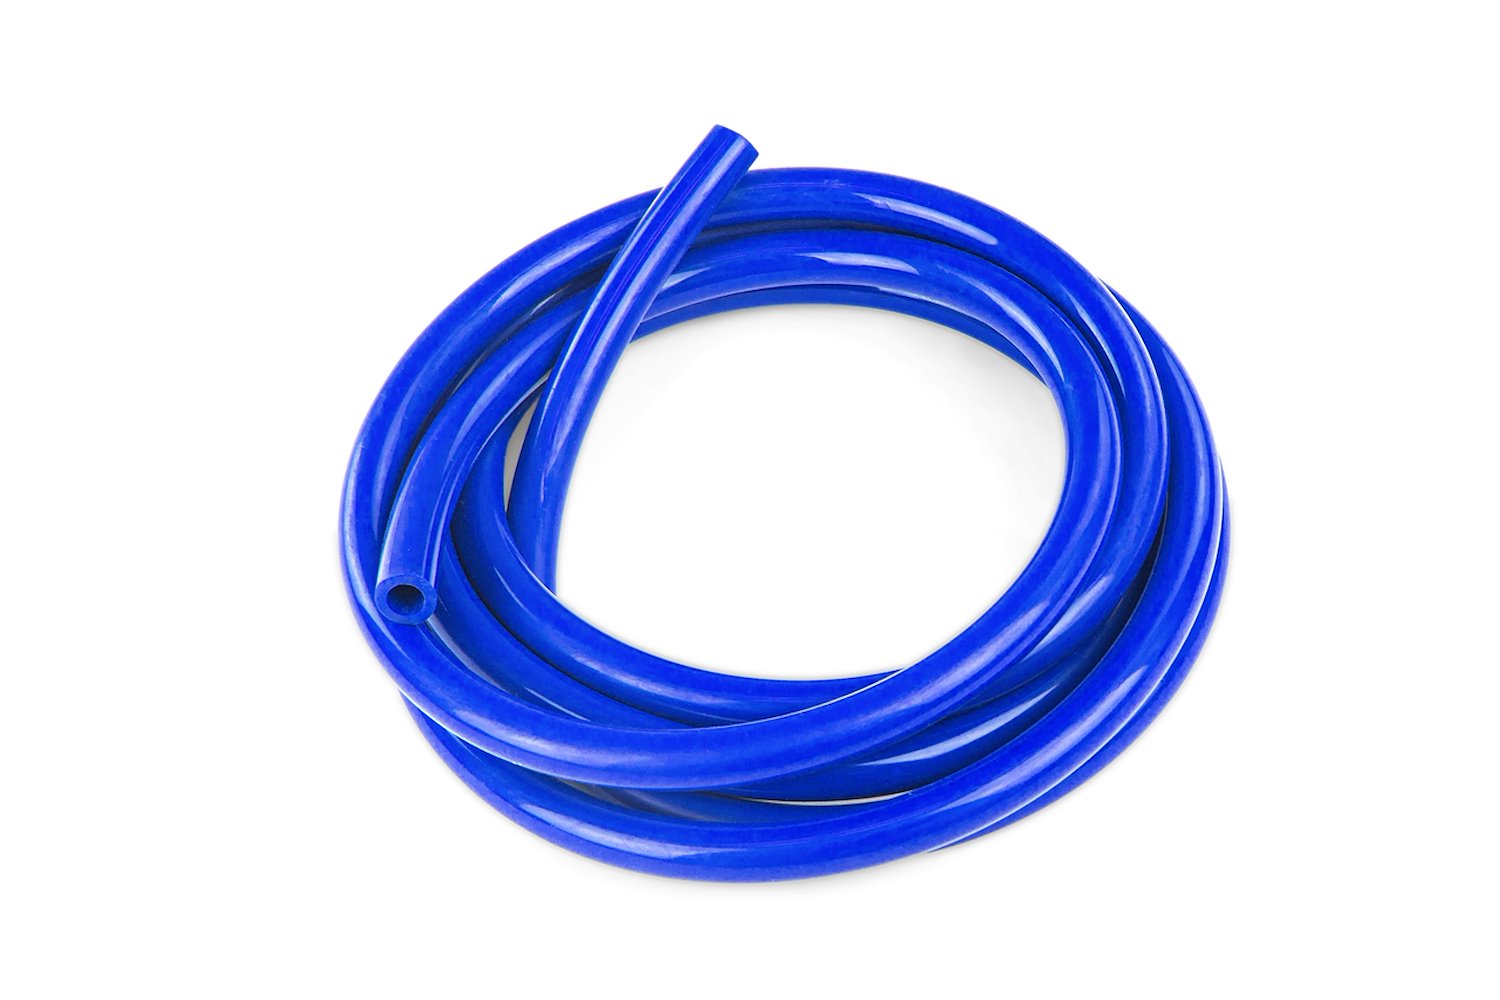 HTSVH2-BLUEx10 High-Temperature Silicone Vacuum Hose Tubing, 5/64 in. ID, 10 ft. Roll, Blue